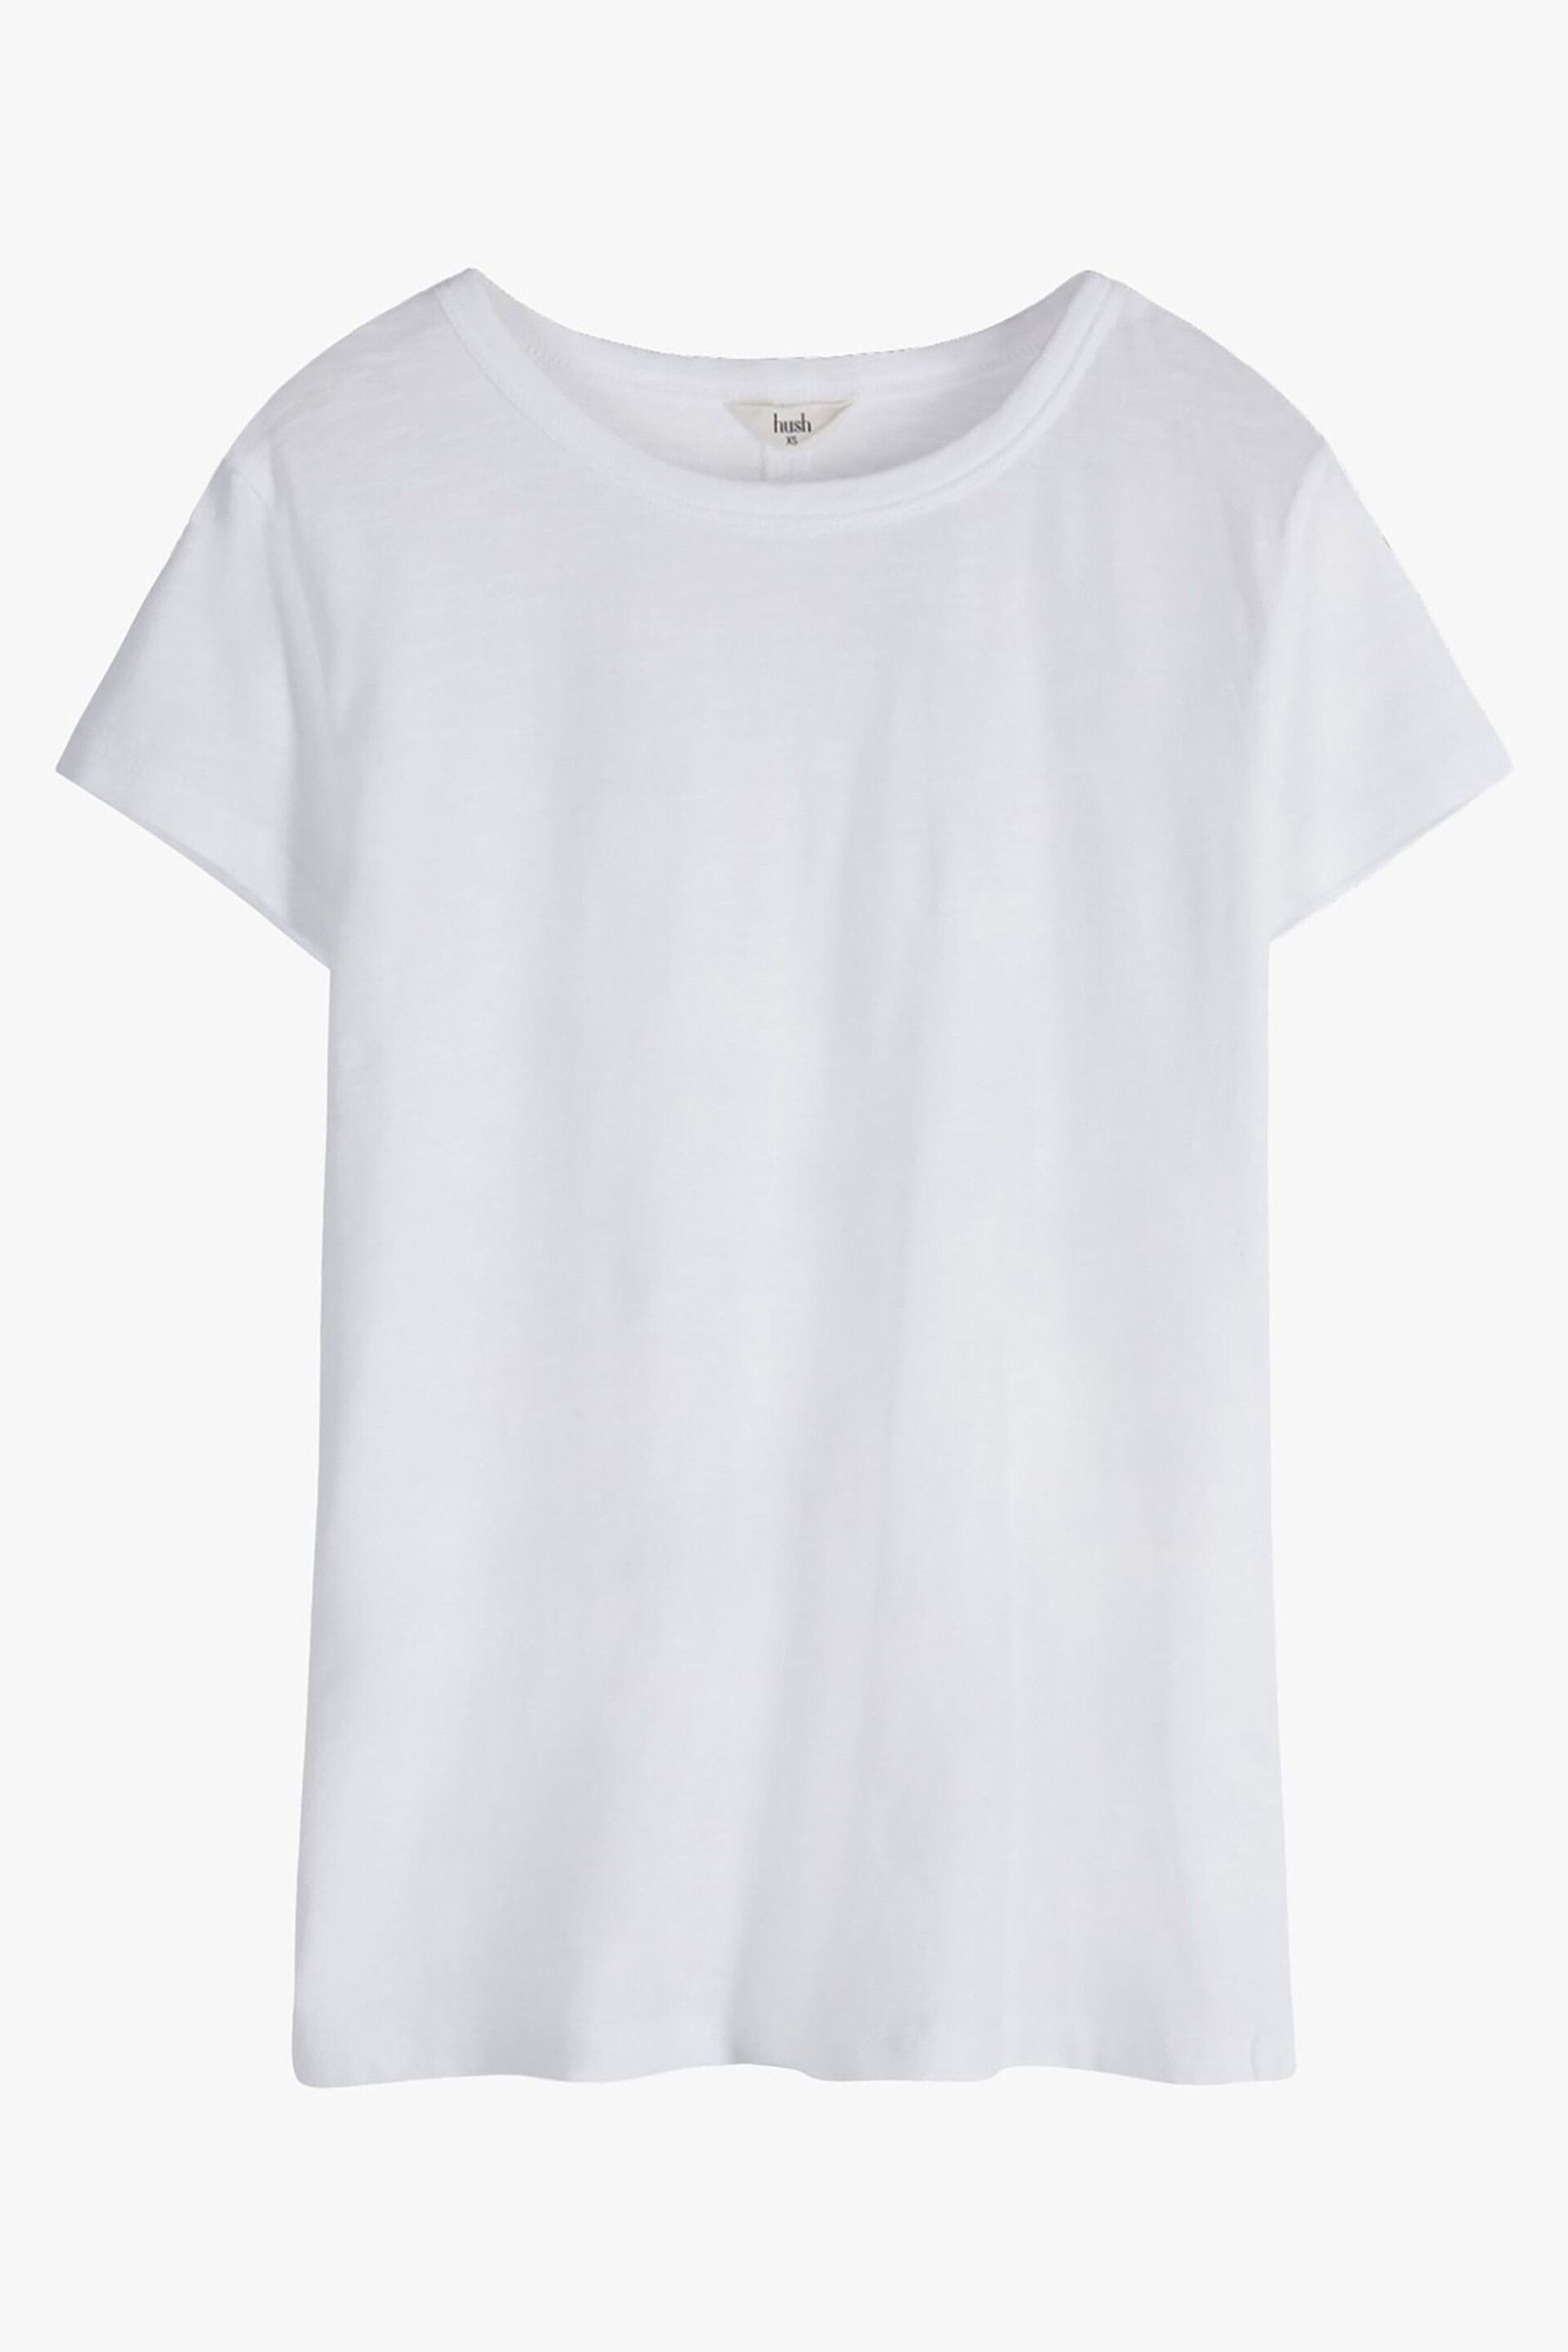 Hush White Slim Fit Crew T-Shirt - Image 5 of 5